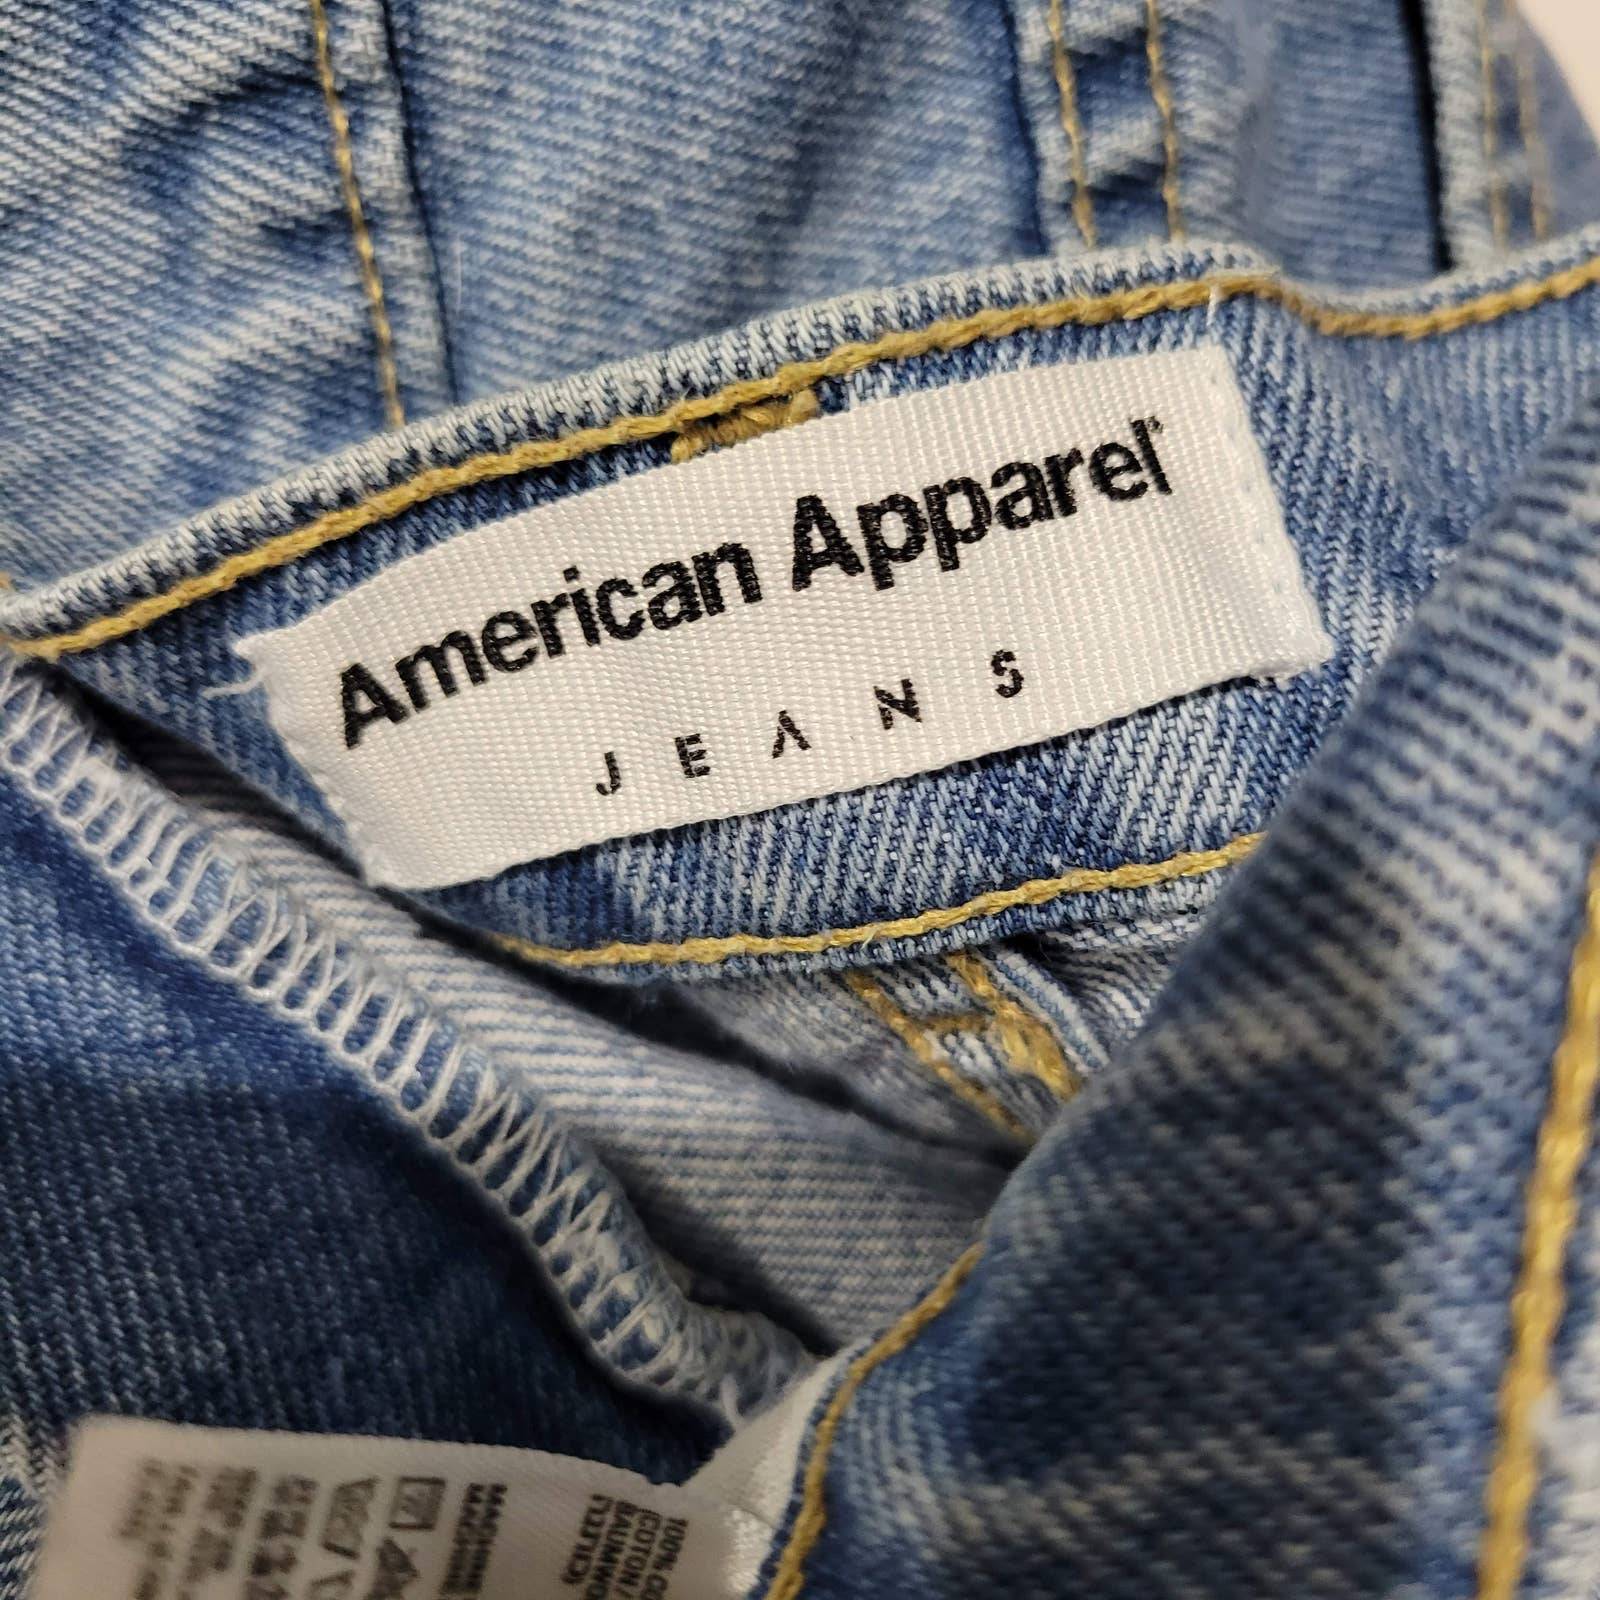 American Apparel High Rise Jean Shorts Cuffed Blue Light Wash Cotton Size 29